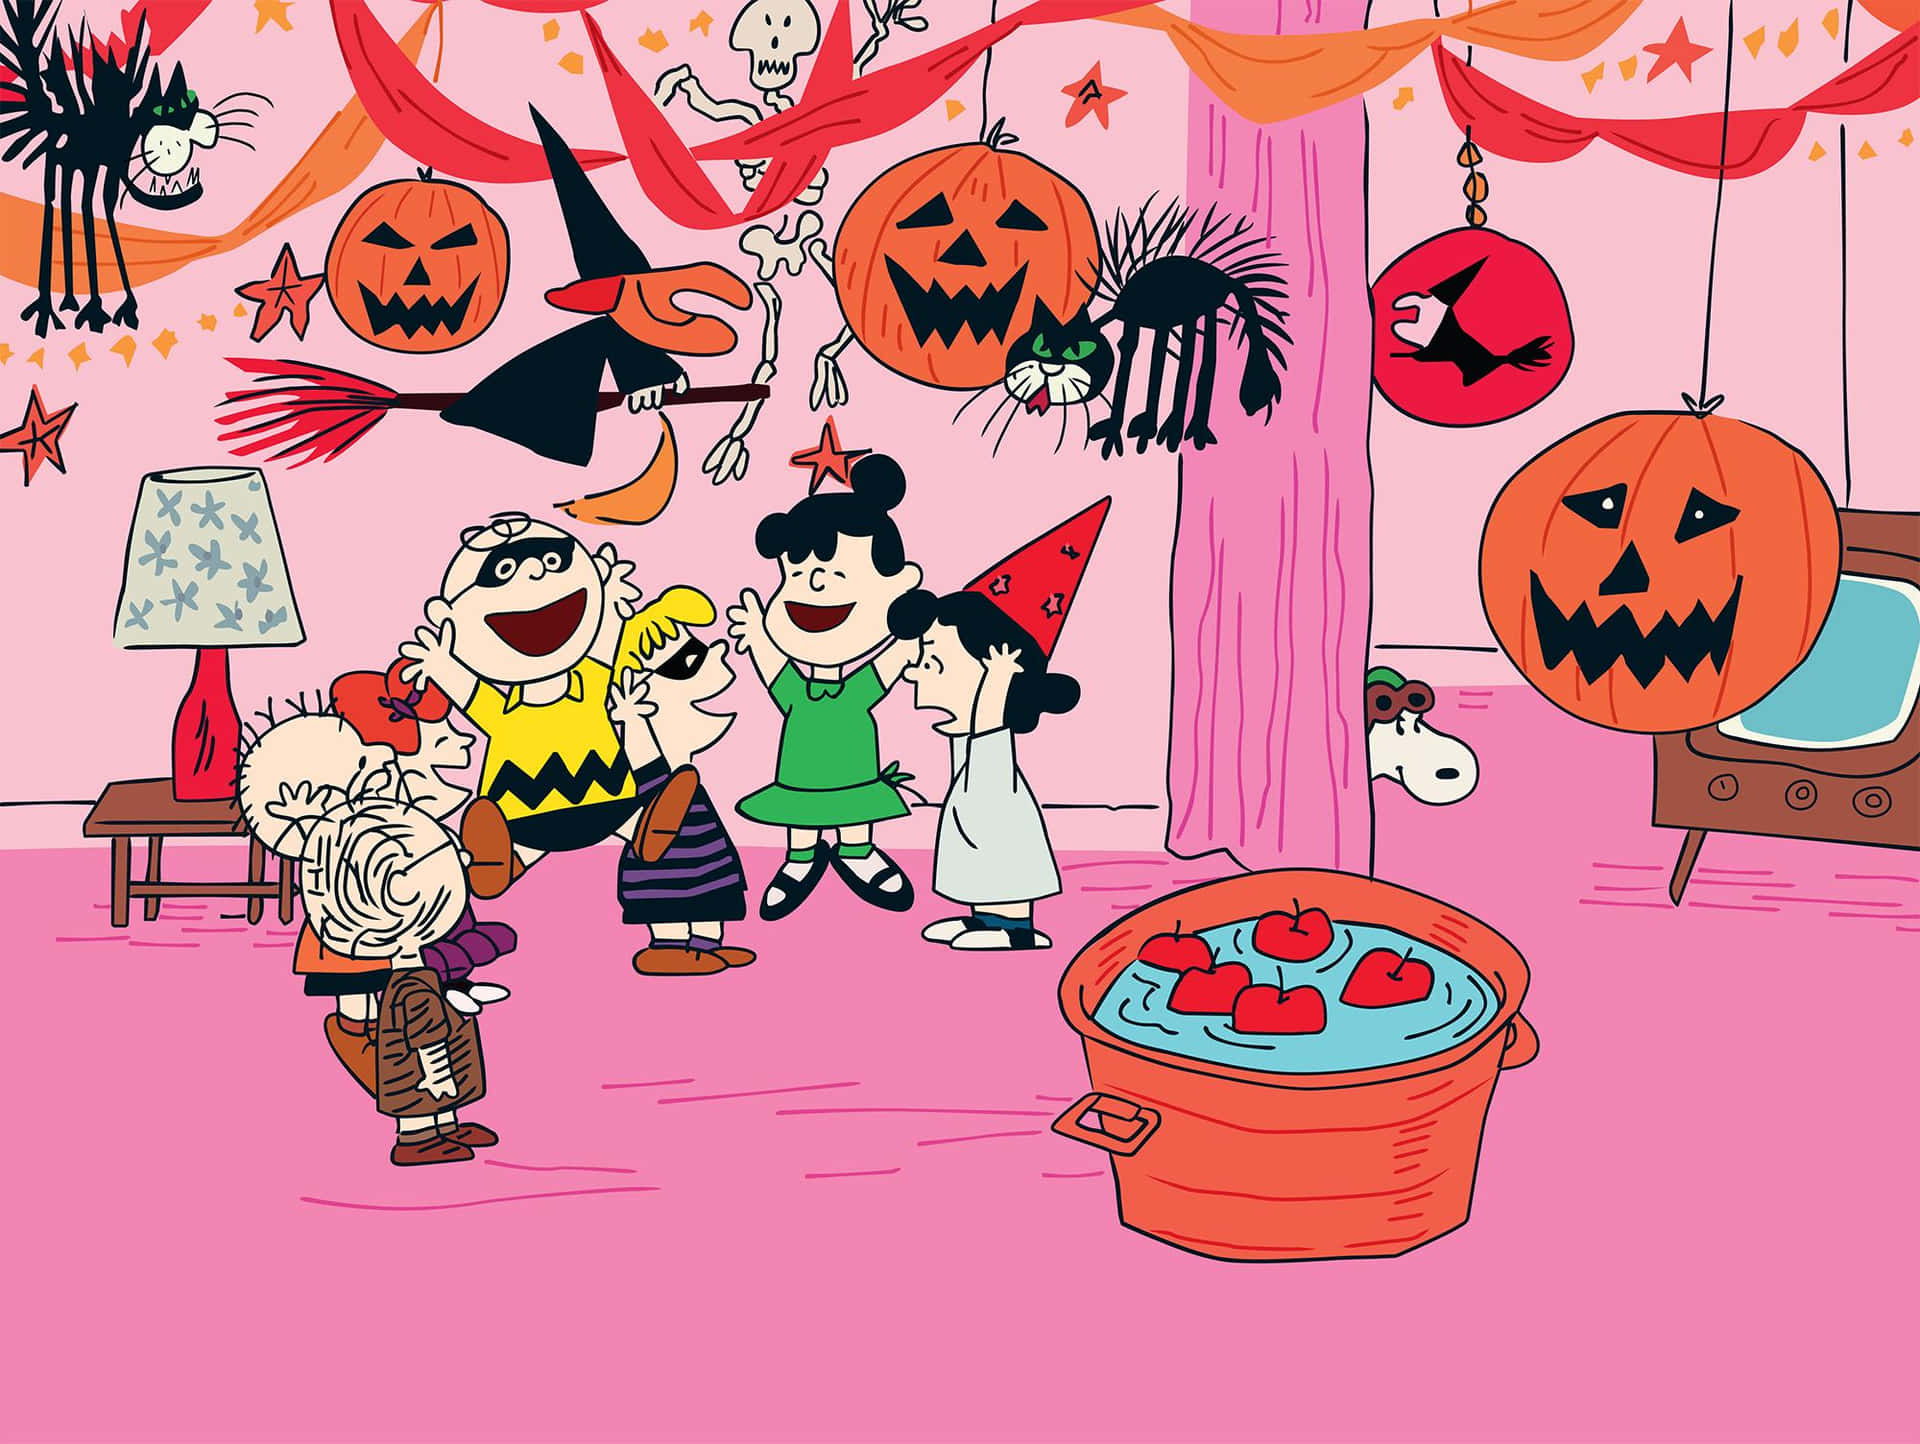 'Charlie Brown Celebrates His Favorite Holiday - Halloween!'